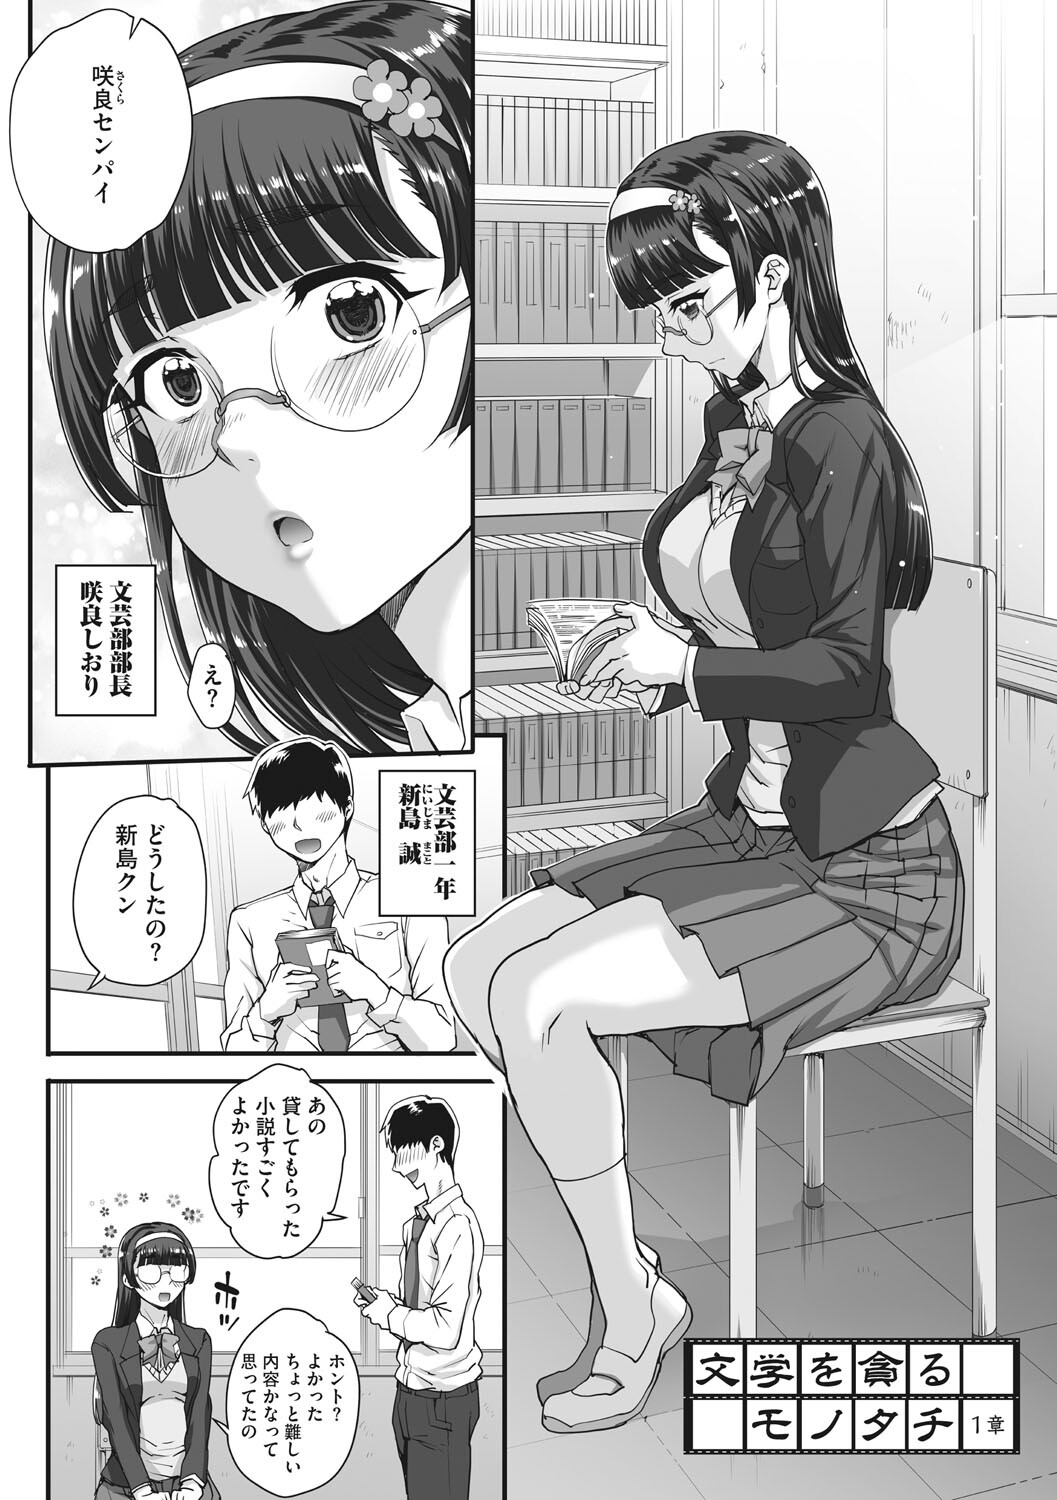 Aoharu snatch manga